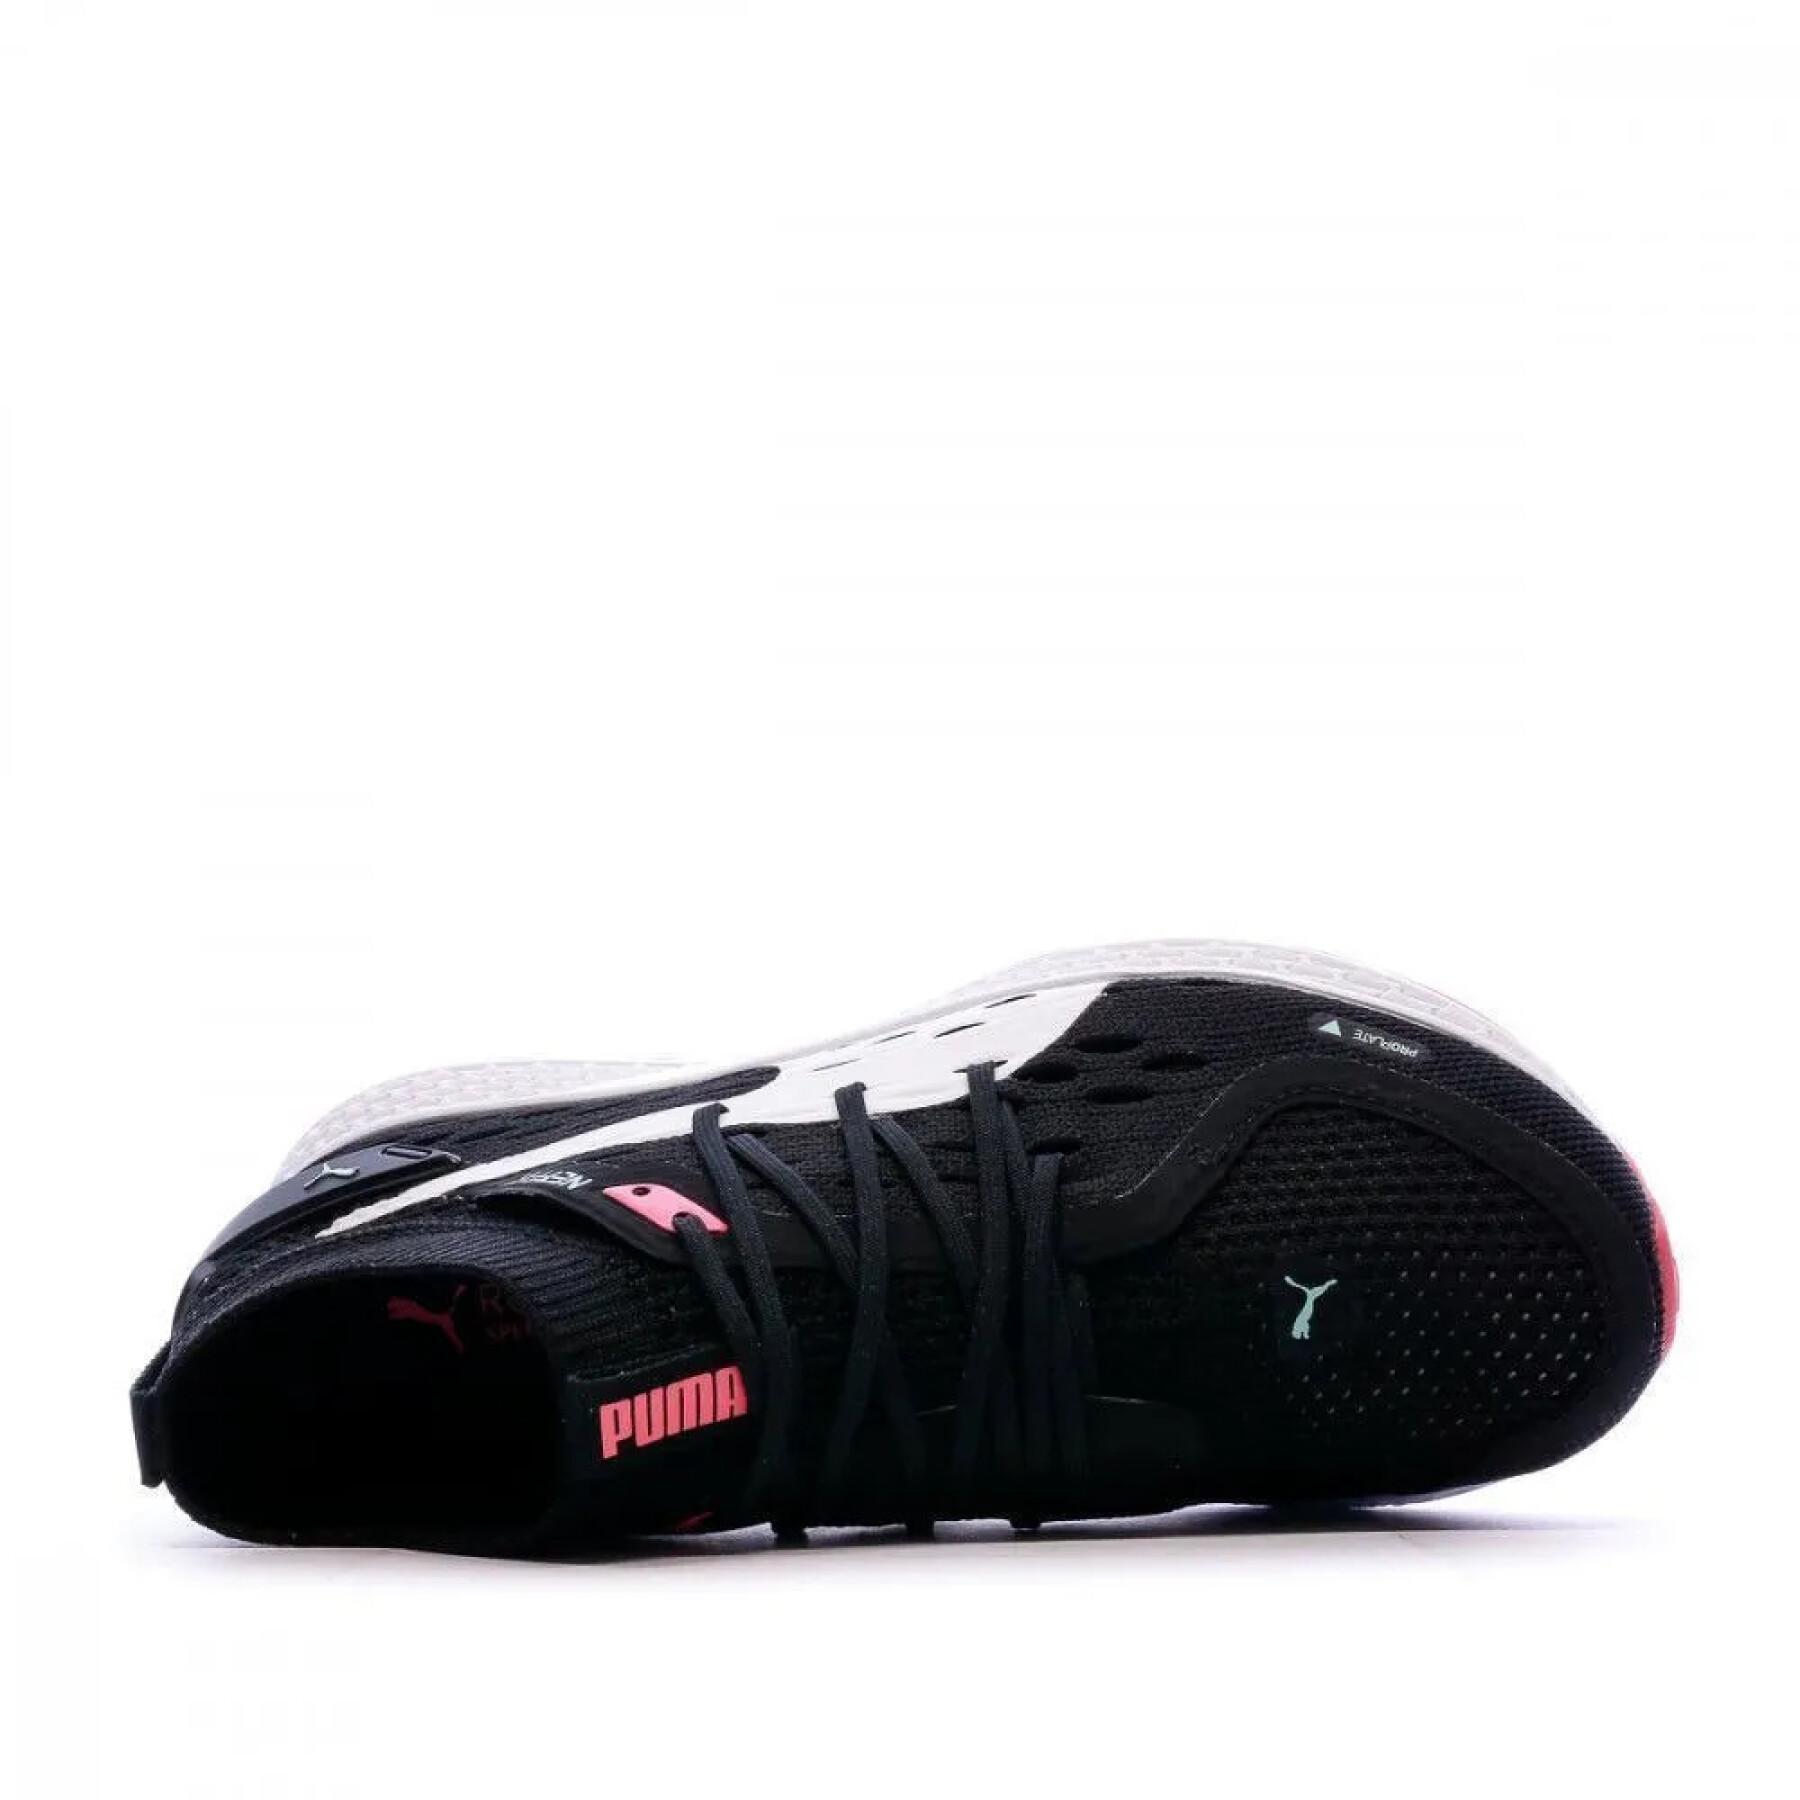 Zapatos de mujer Puma speed 500